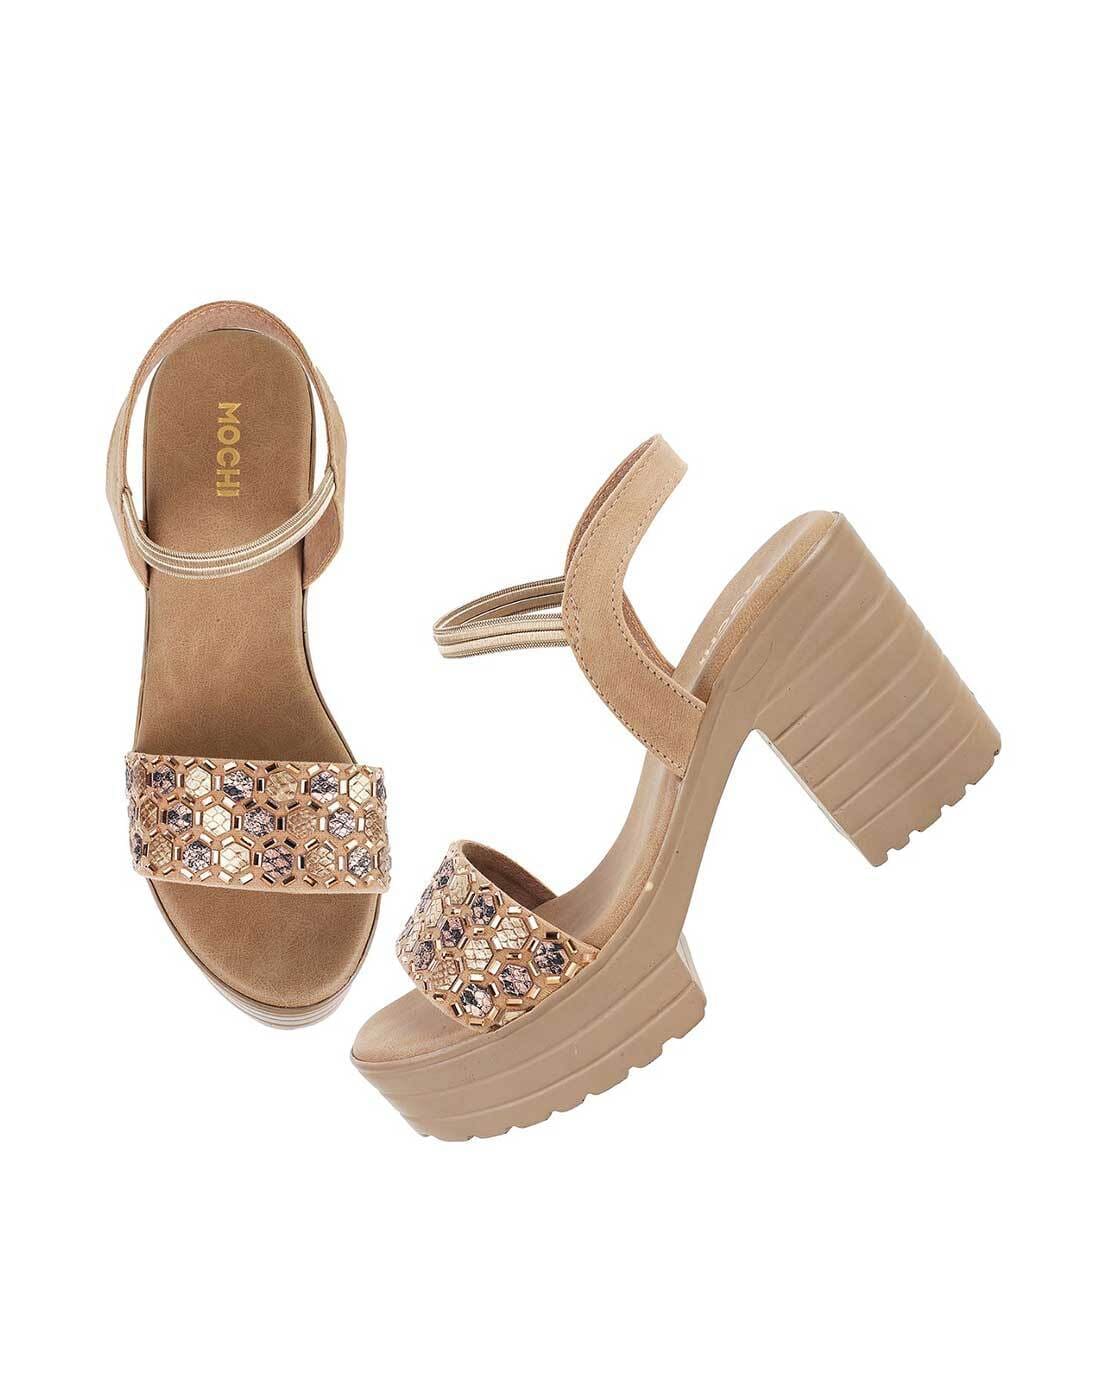 Buy Mochi Women Ant Gold Synthetic Leather Wegde Heel Sandal UK/3 EU/36  (34-124) at Amazon.in